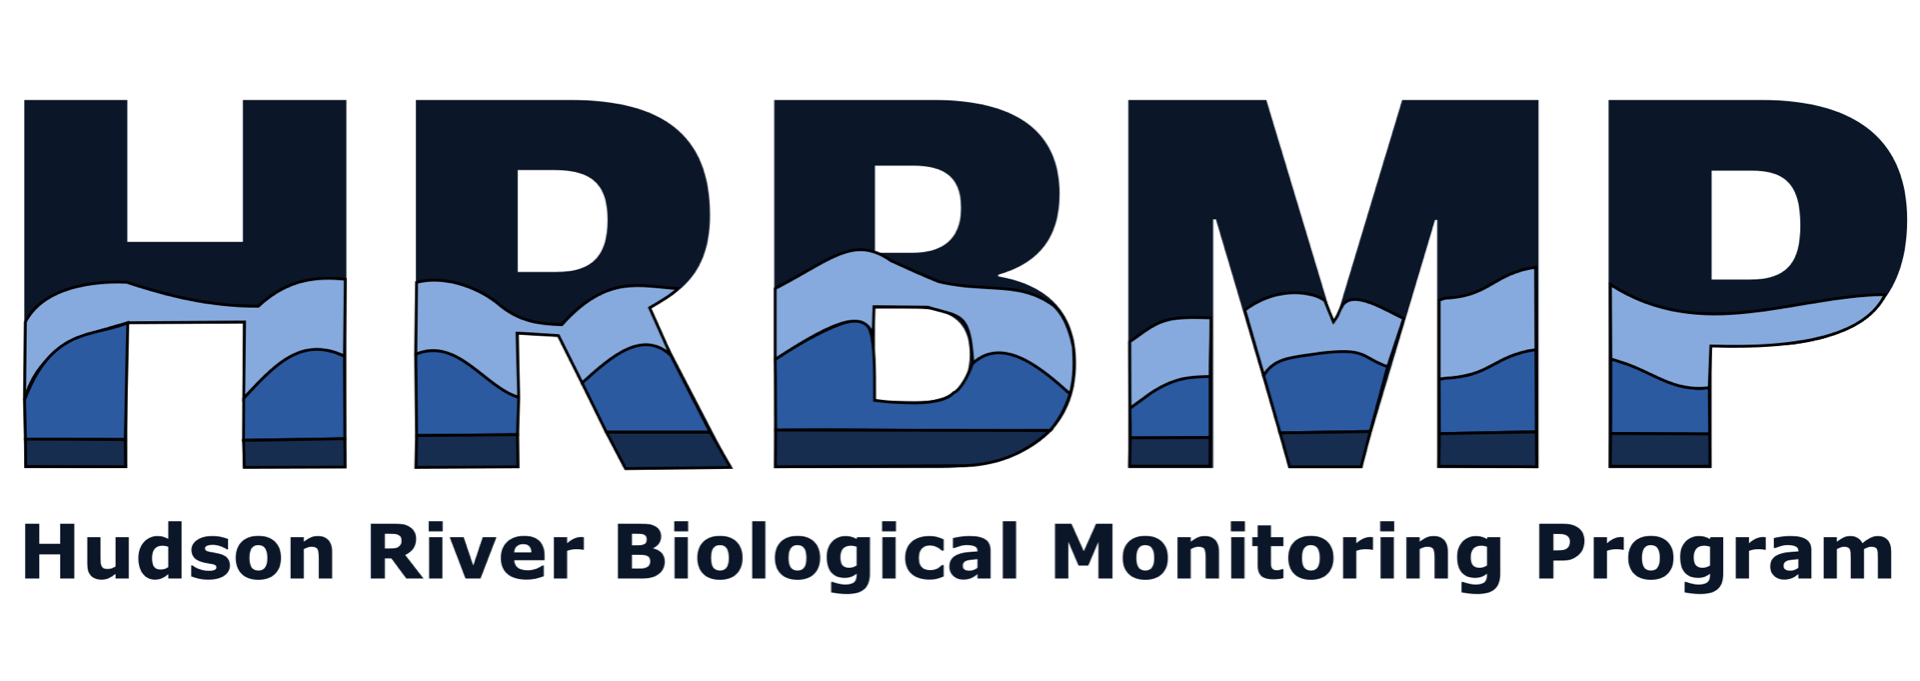 Hudson River Biological Monitoring Program